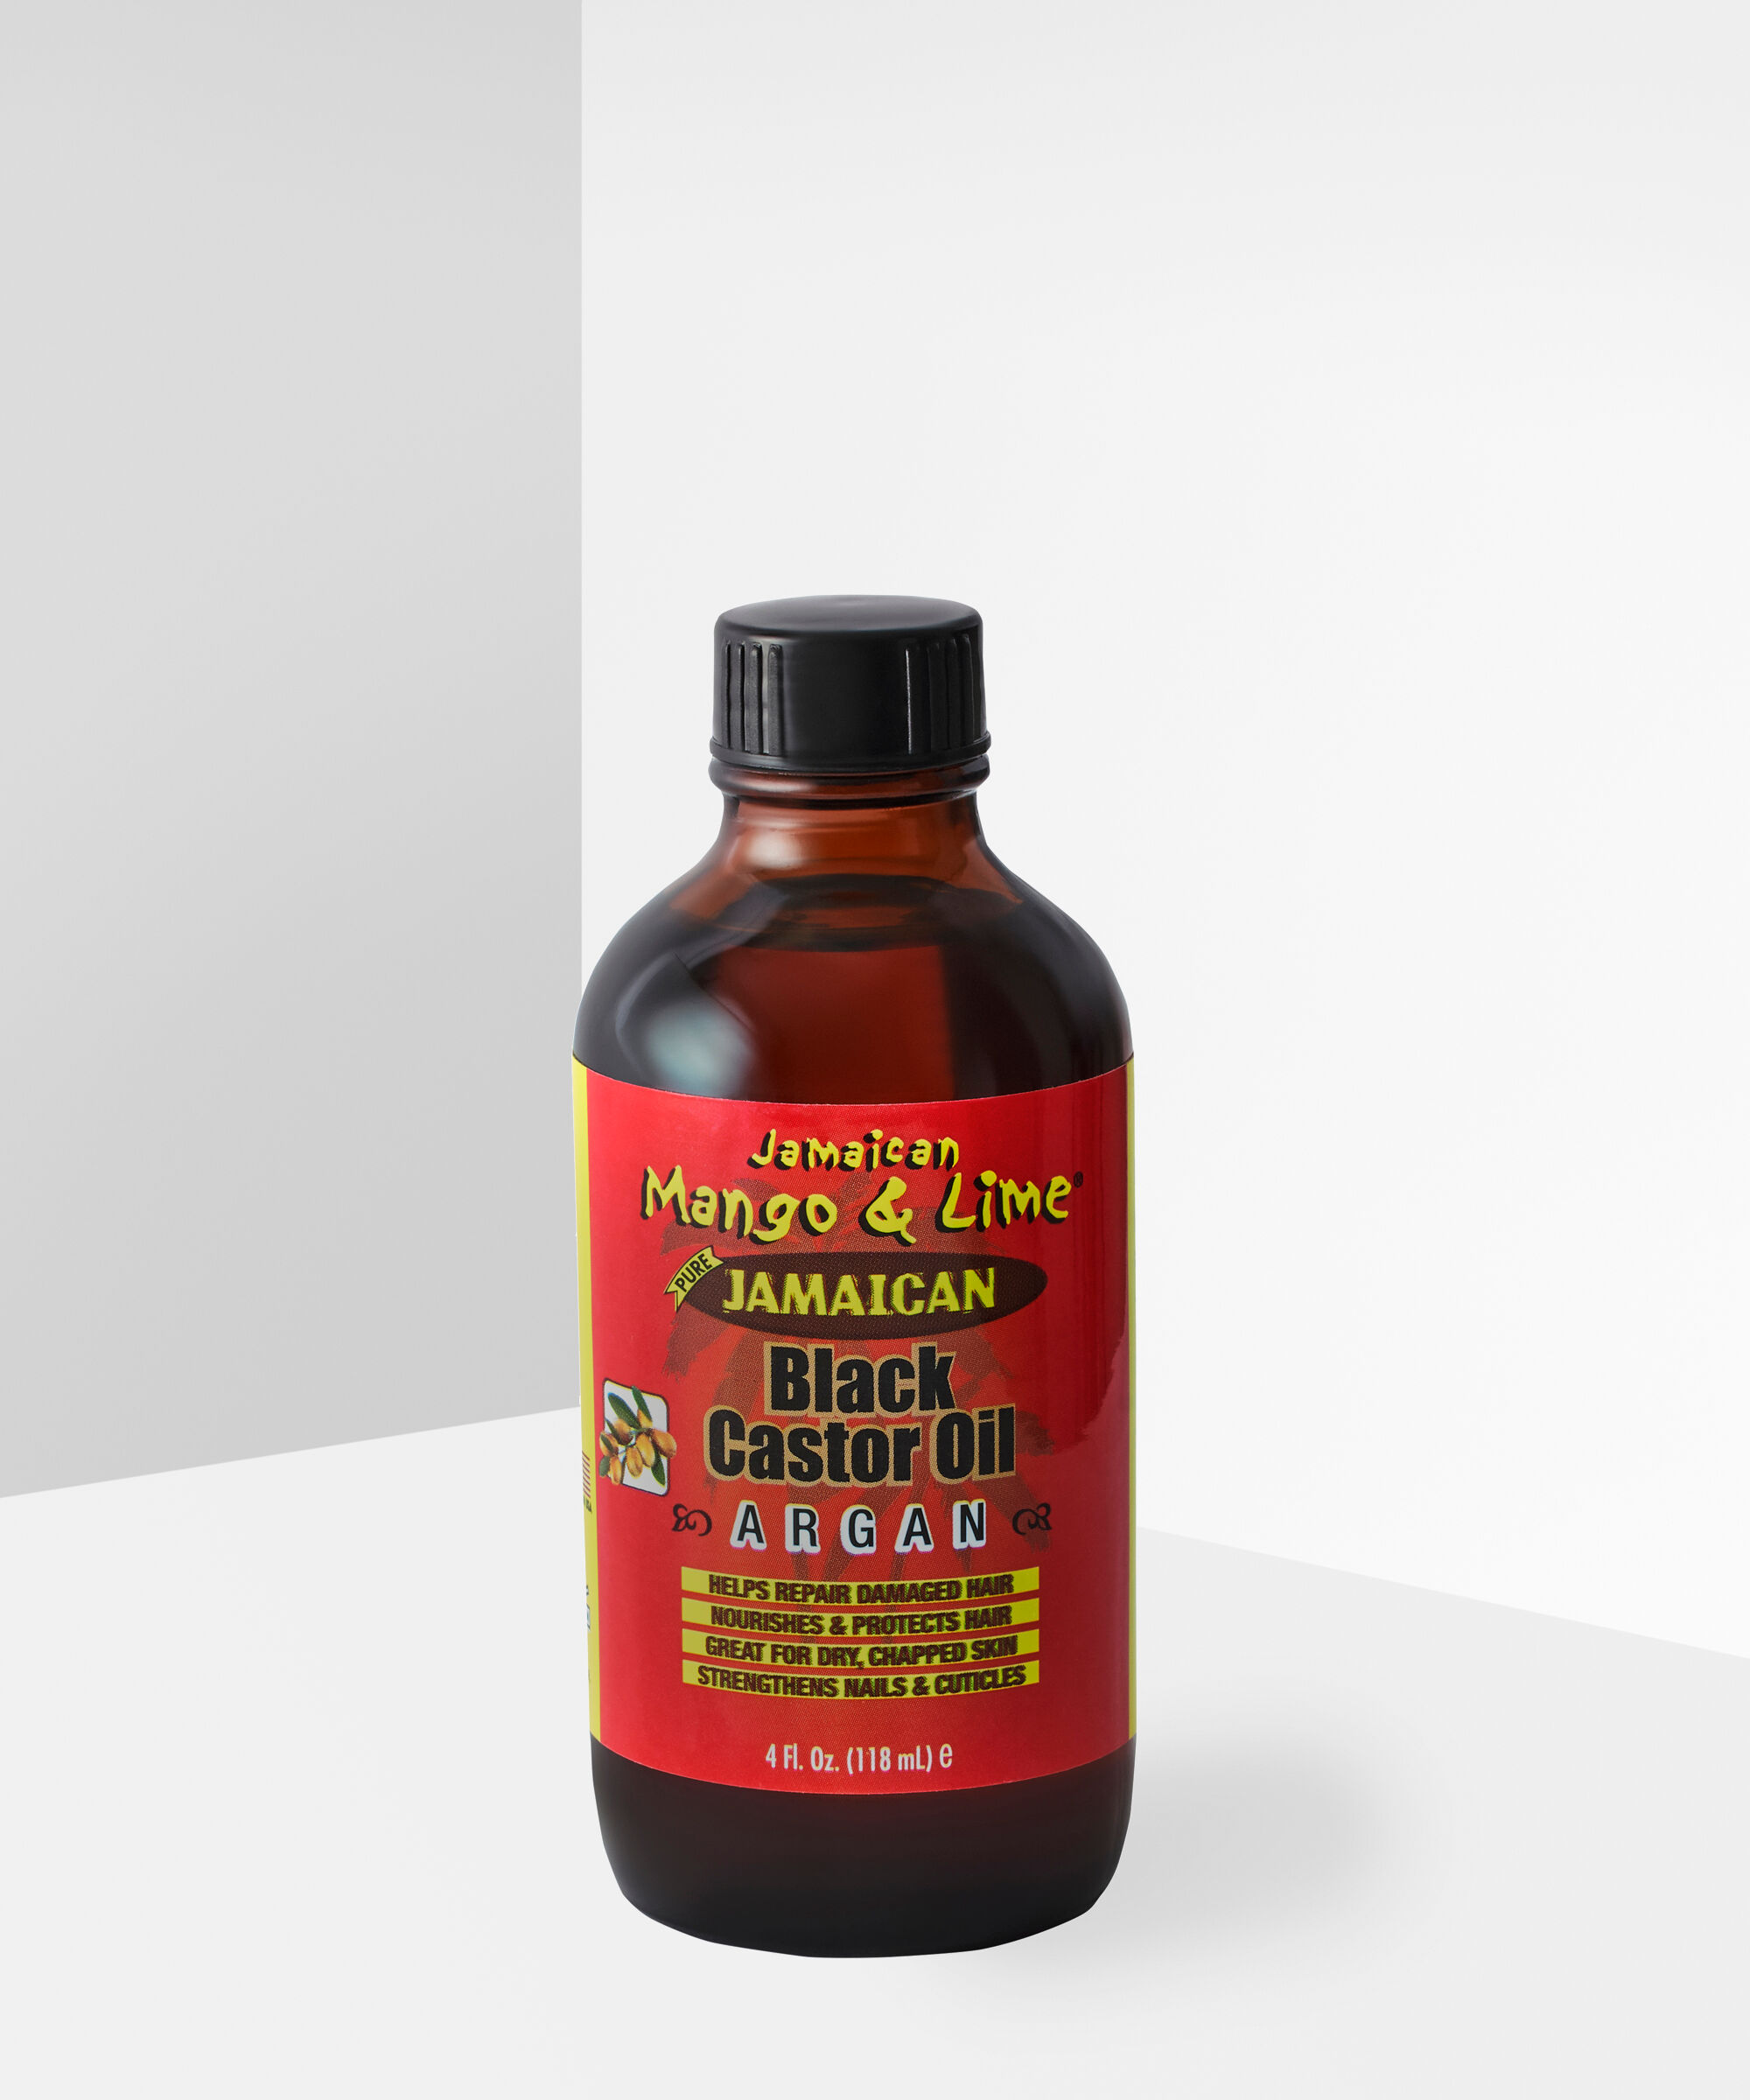 JAMAICAN MANGO & LIME - Jamaican Black Castor Oil Argan